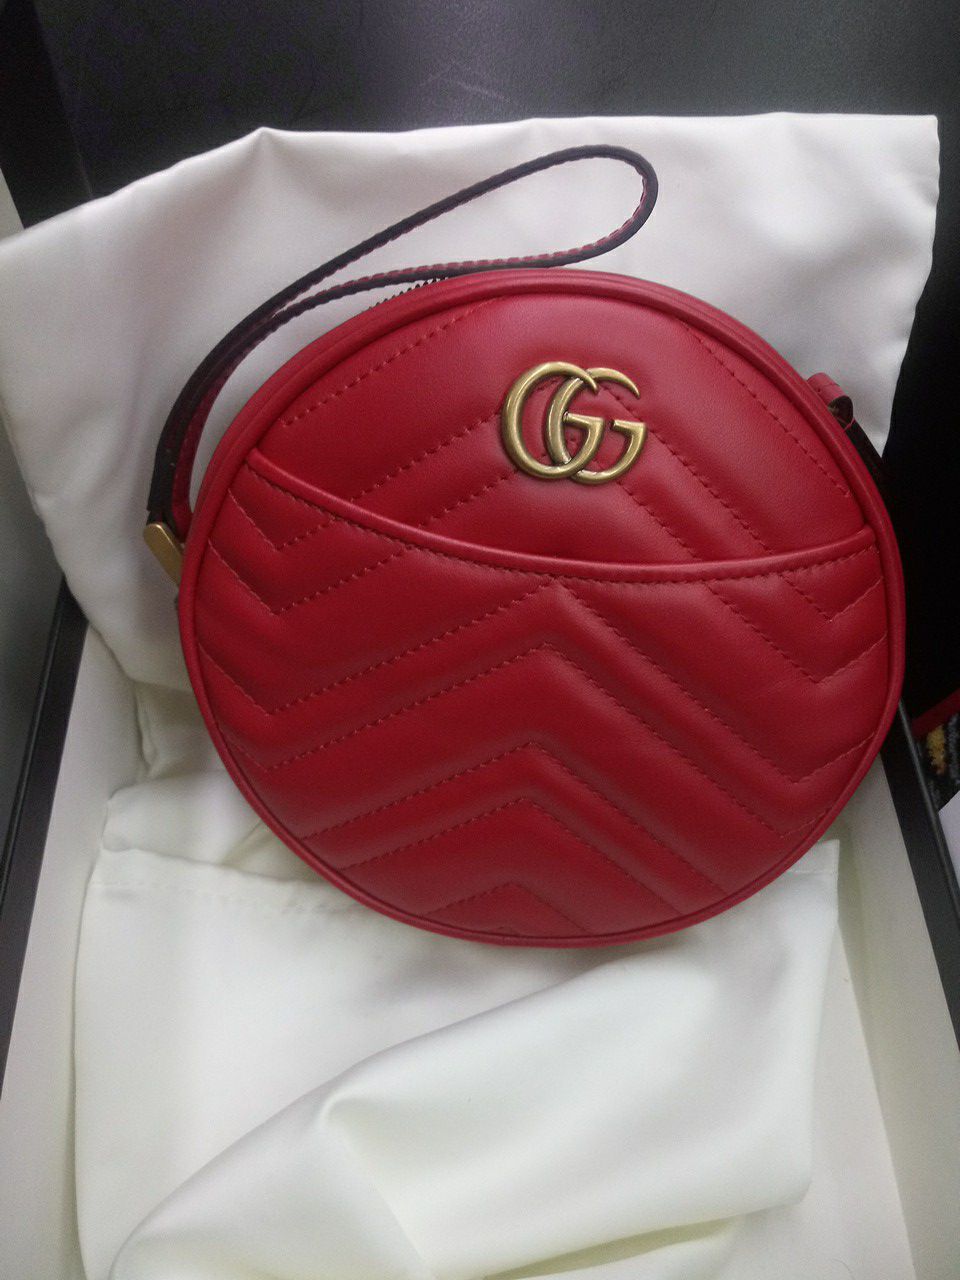 Gucci hand bag